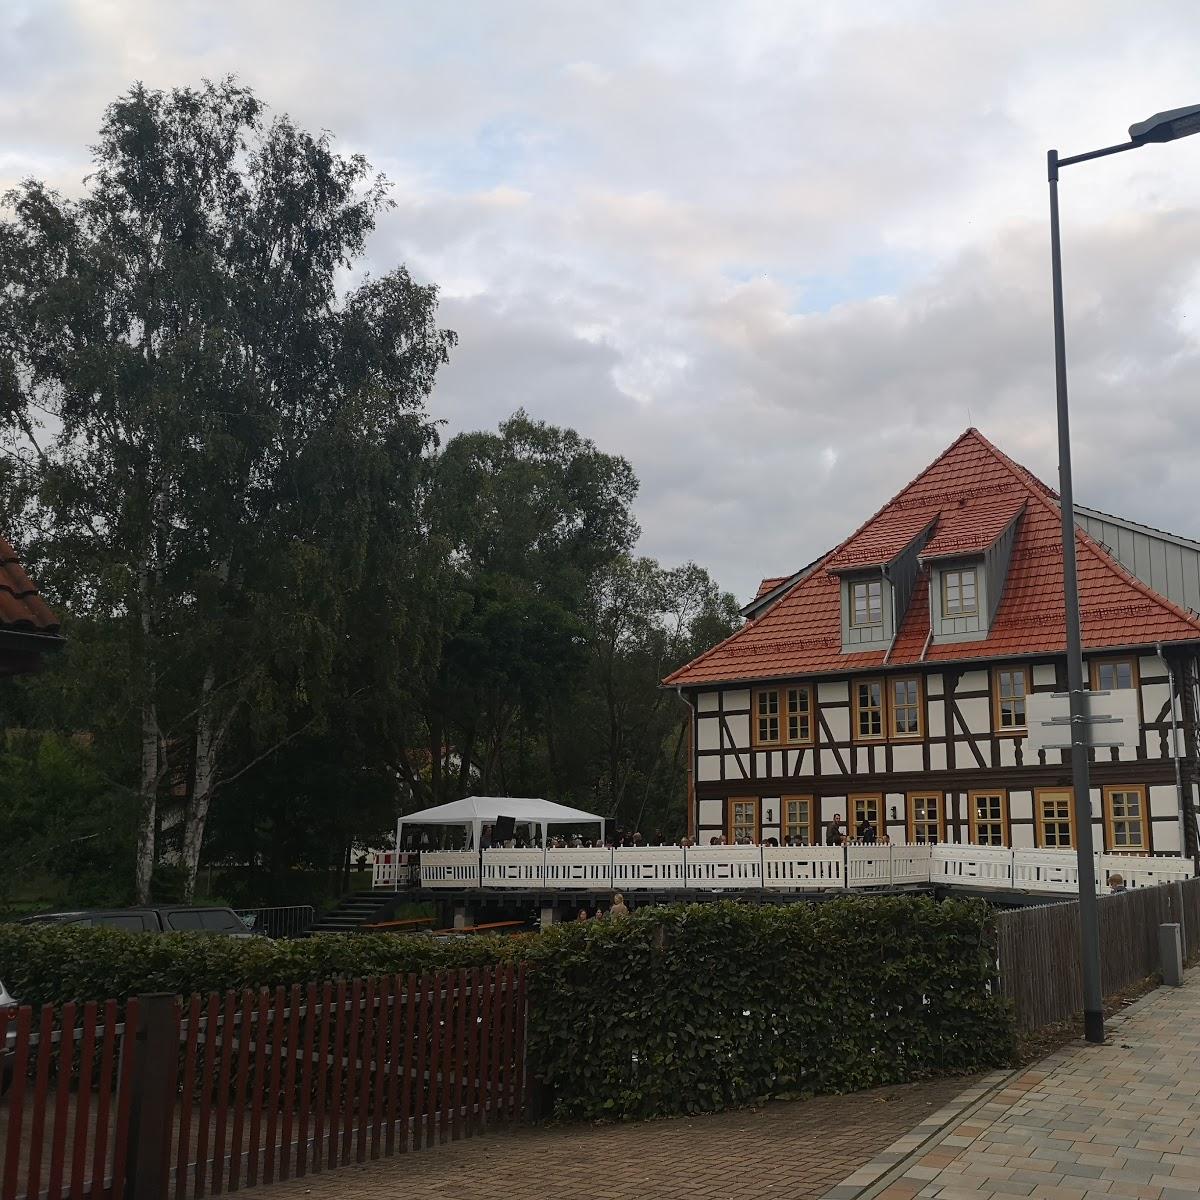 Restaurant "Teutsche Schule" in  Schleusingen